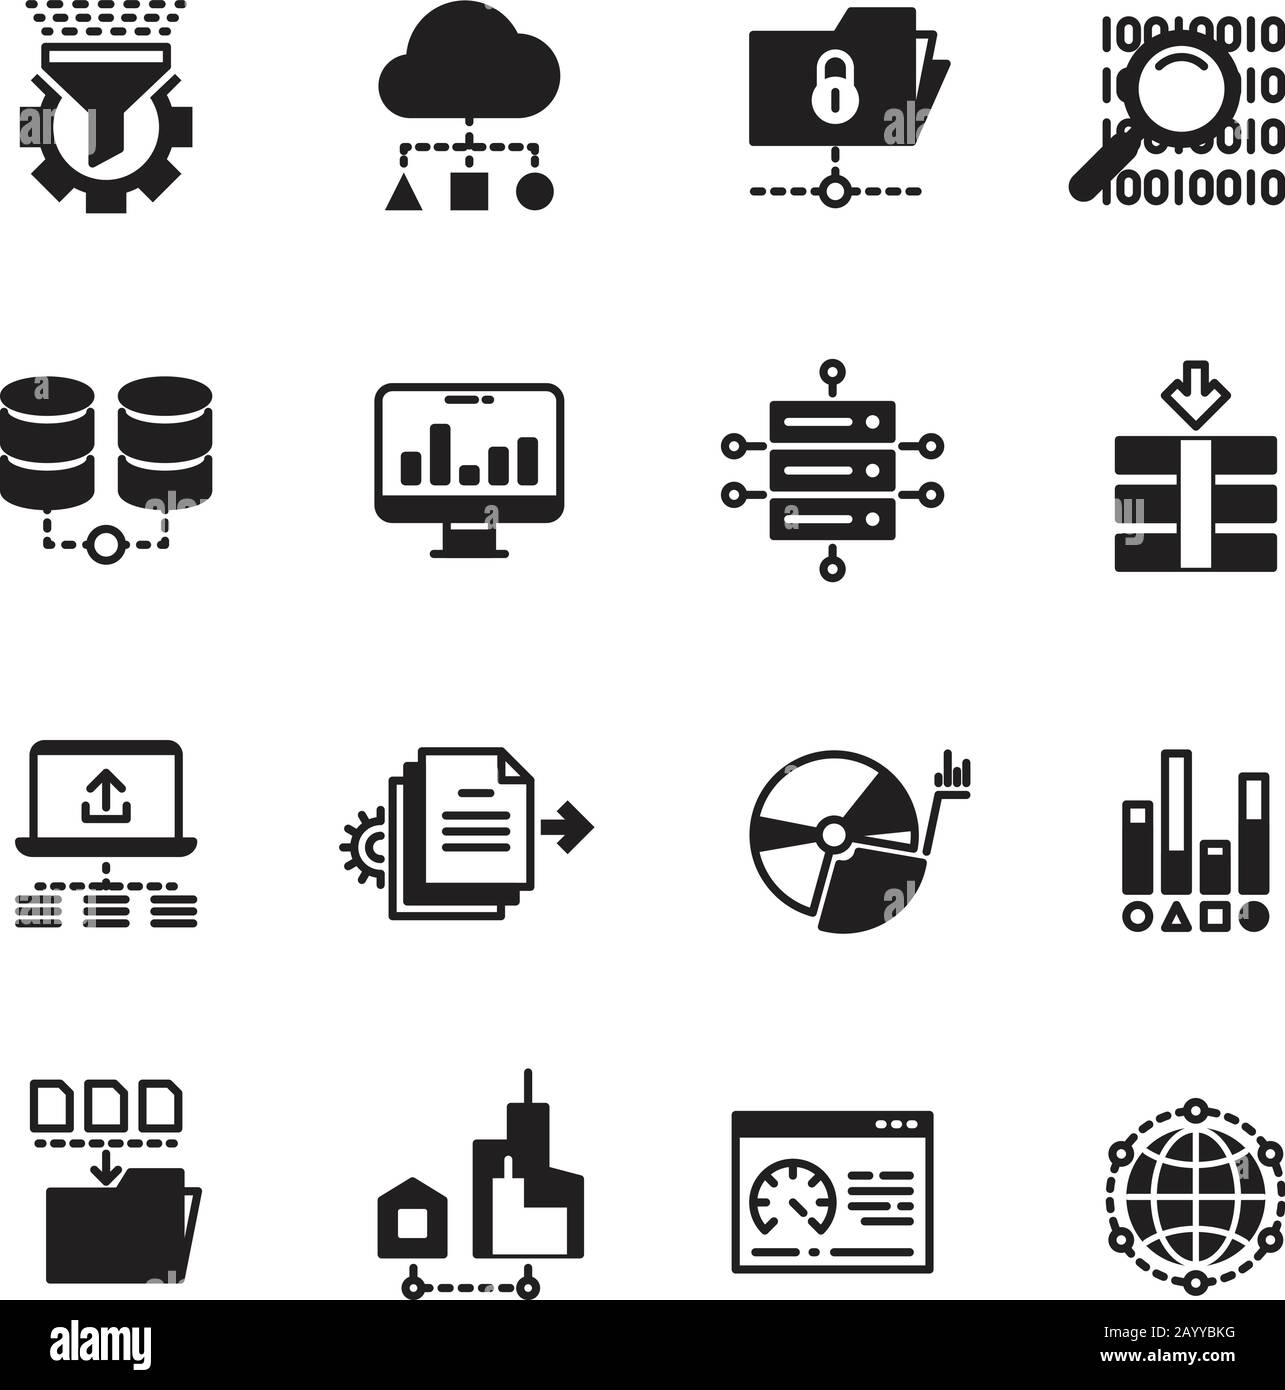 Big data database analytics and cloud computing information technology digital processing icon set. Vector illustration Stock Vector